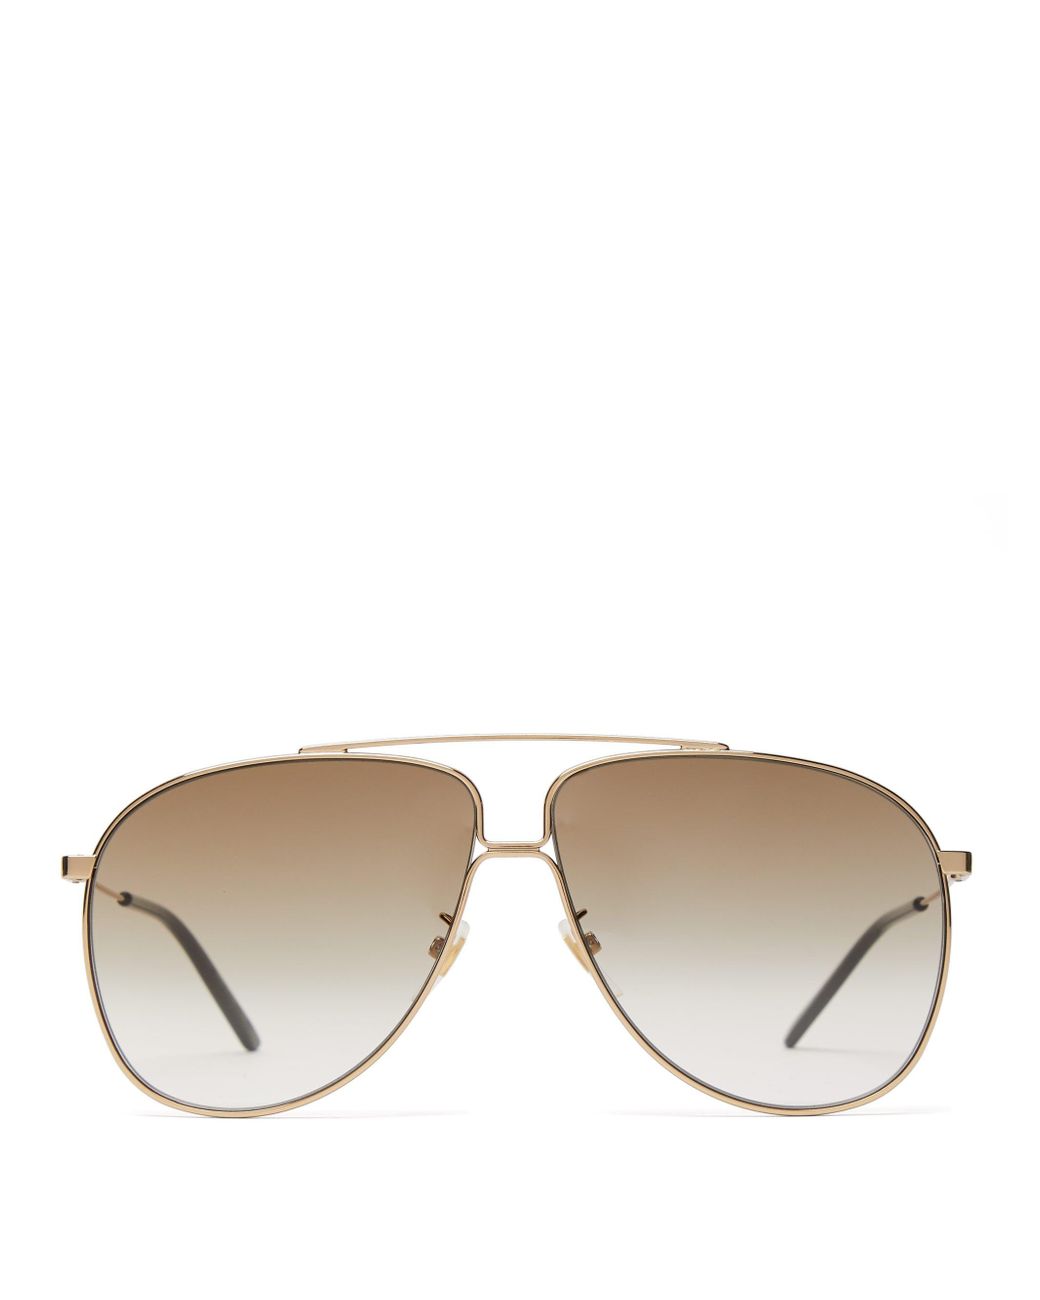 Gucci Oversized Aviator Metal Sunglasses in Gold (Metallic) for Men - Lyst